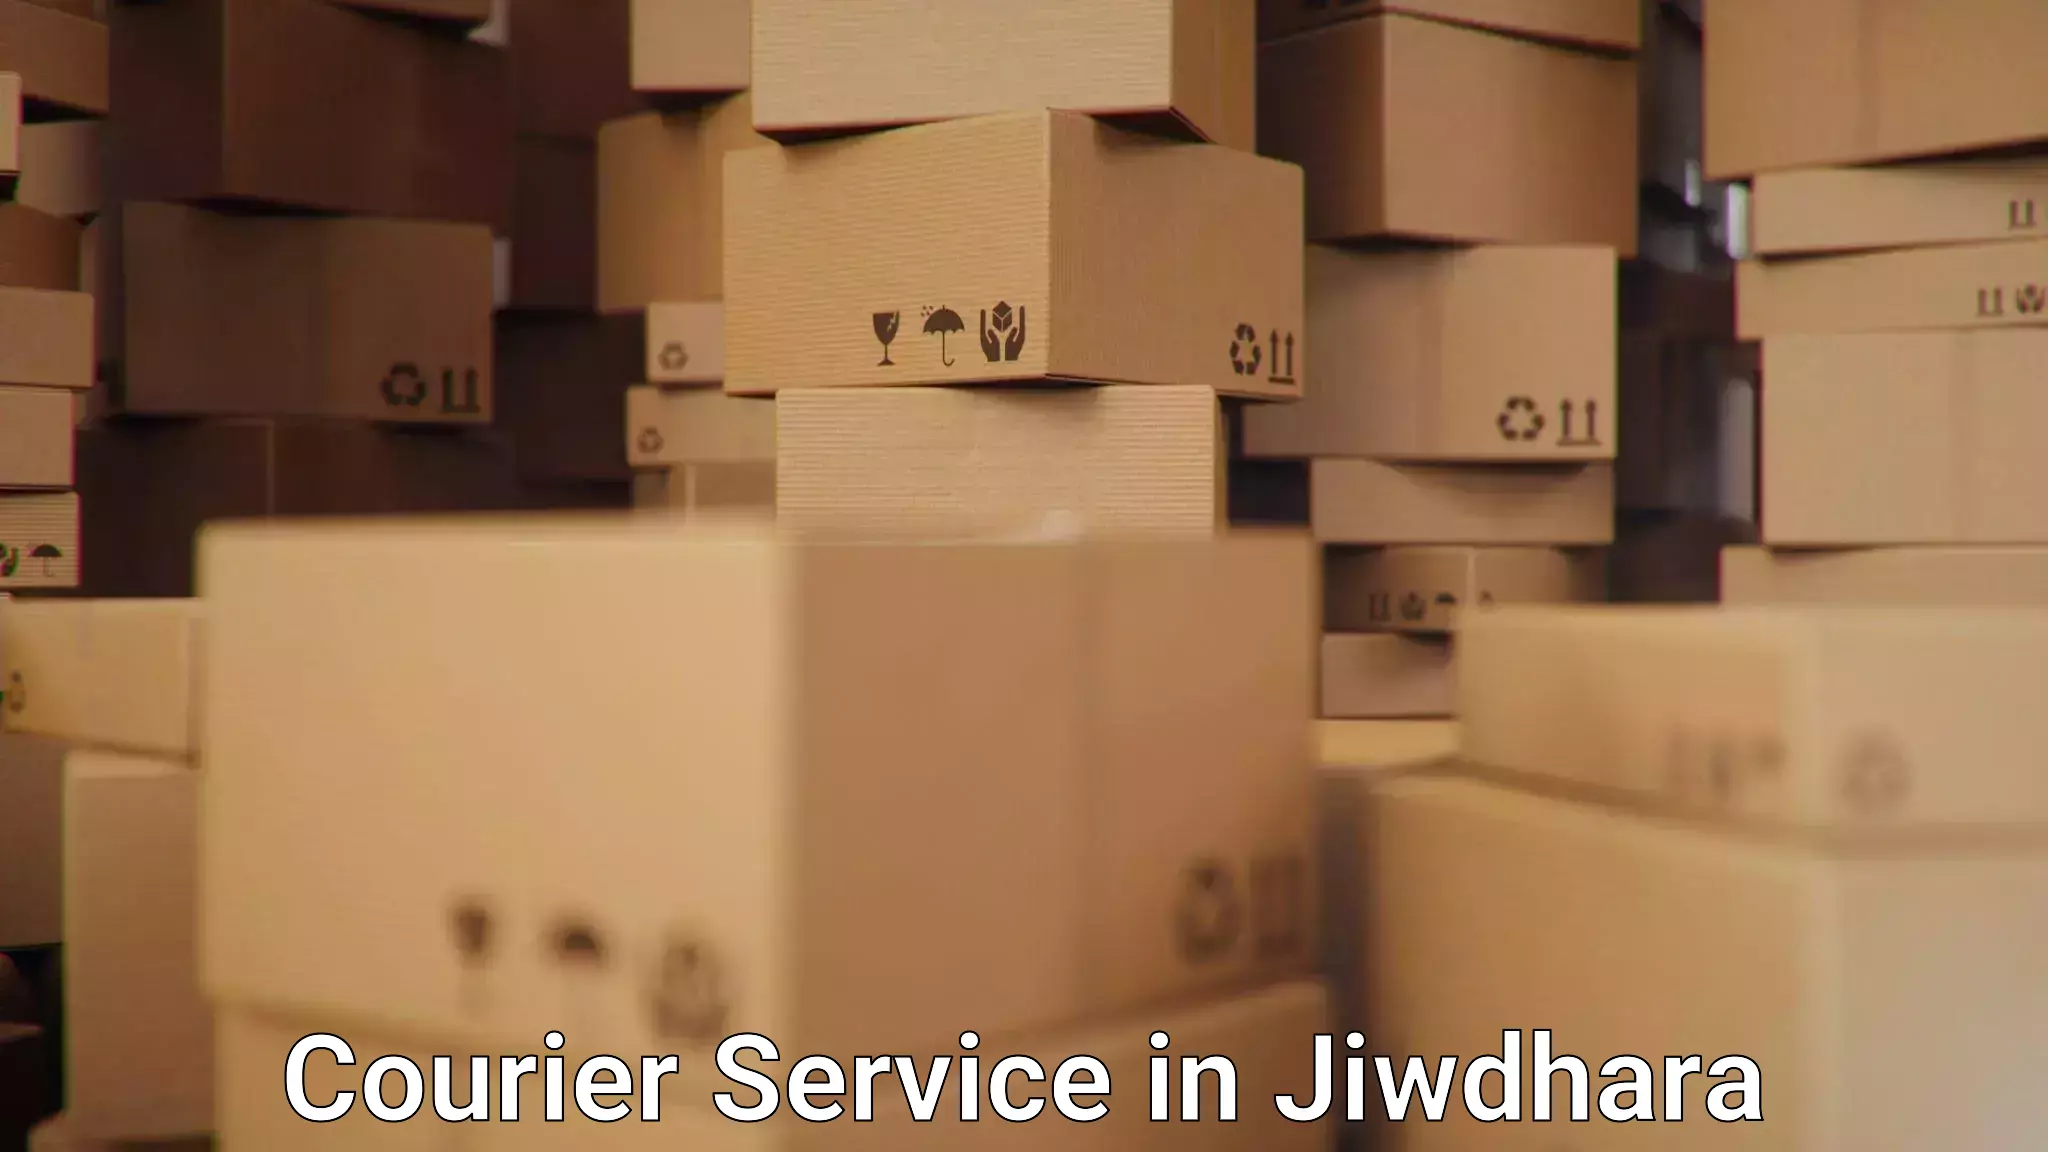 Cargo delivery service in Jiwdhara